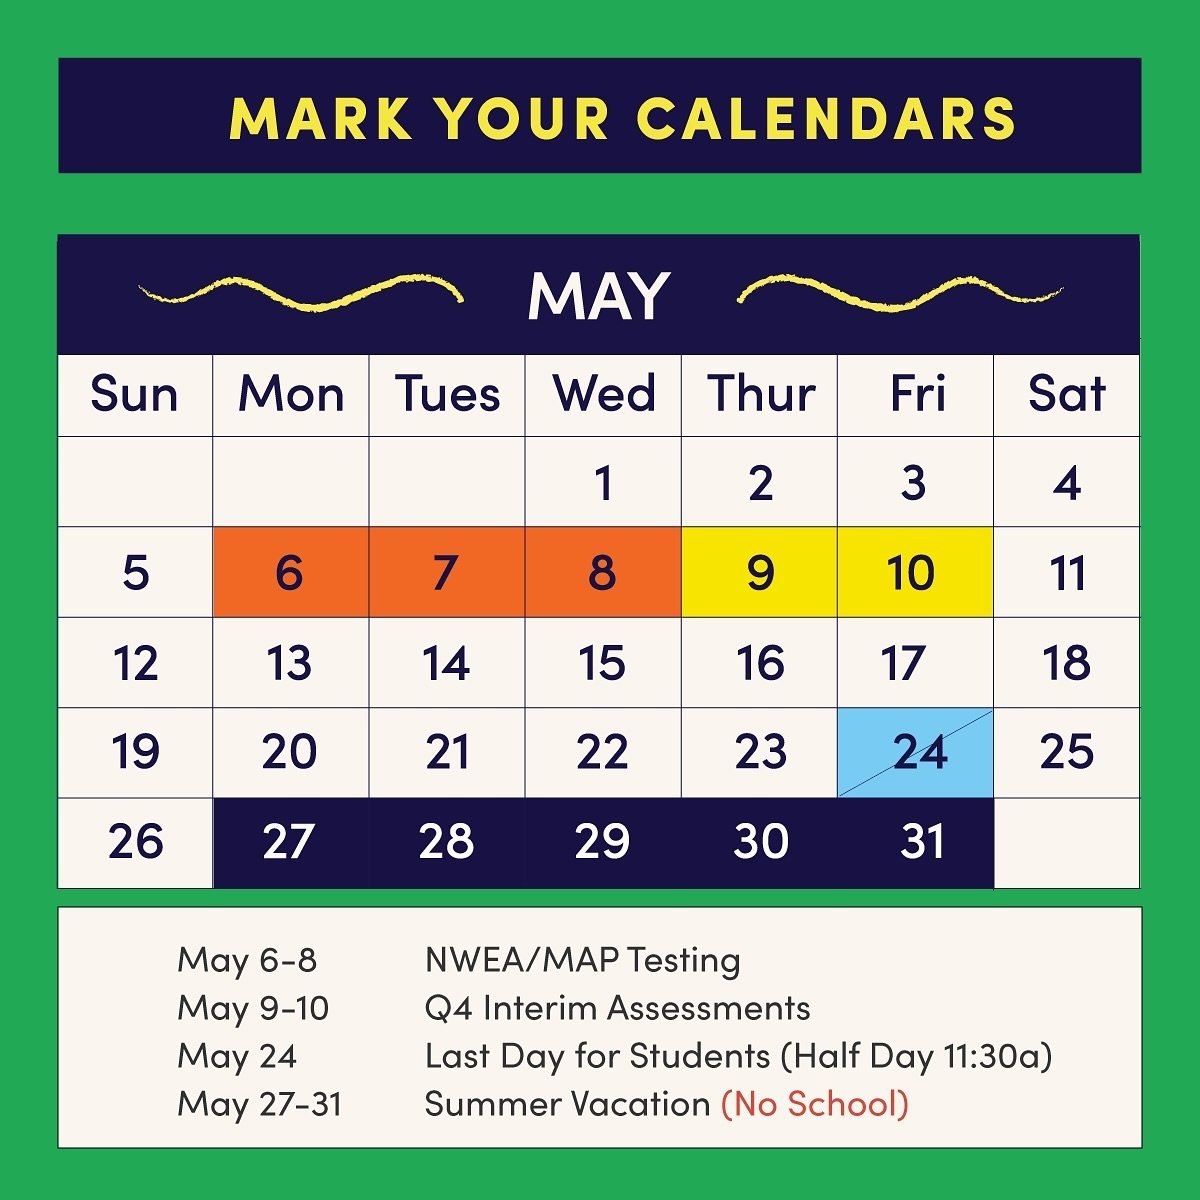 May Calendar Snapshot: Happy May! Be sure to mark your calendars for all the incredible end of year details happening this month!
_______________

Resumen del calendario de mayo: &iexcl;Feliz mayo! &iexcl;Aseg&uacute;rense de marcar en sus calendario